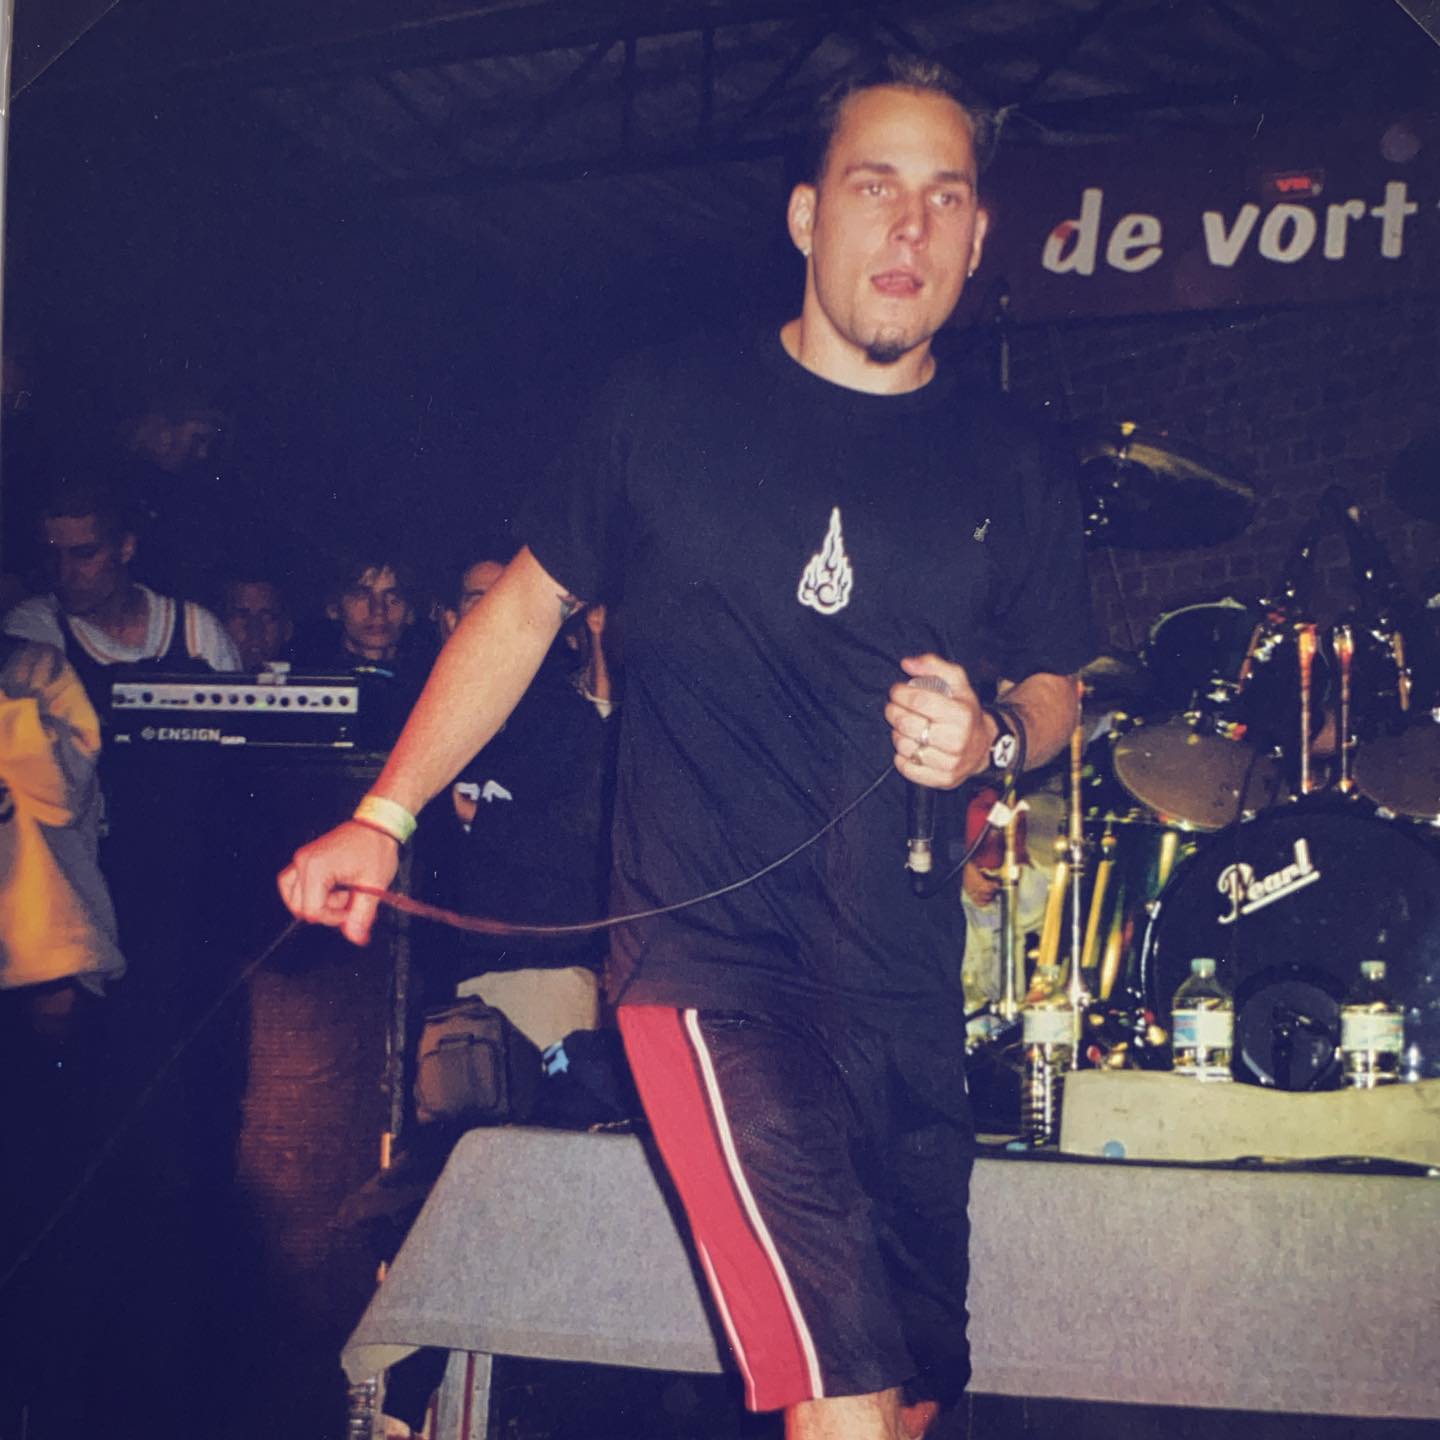 Ensign - Hardcore Festival at Vort ’n Vis Ieper (B) - 20/21/22 August 1999 #straightedge #hardcore #gigpic by @twentylandcrew